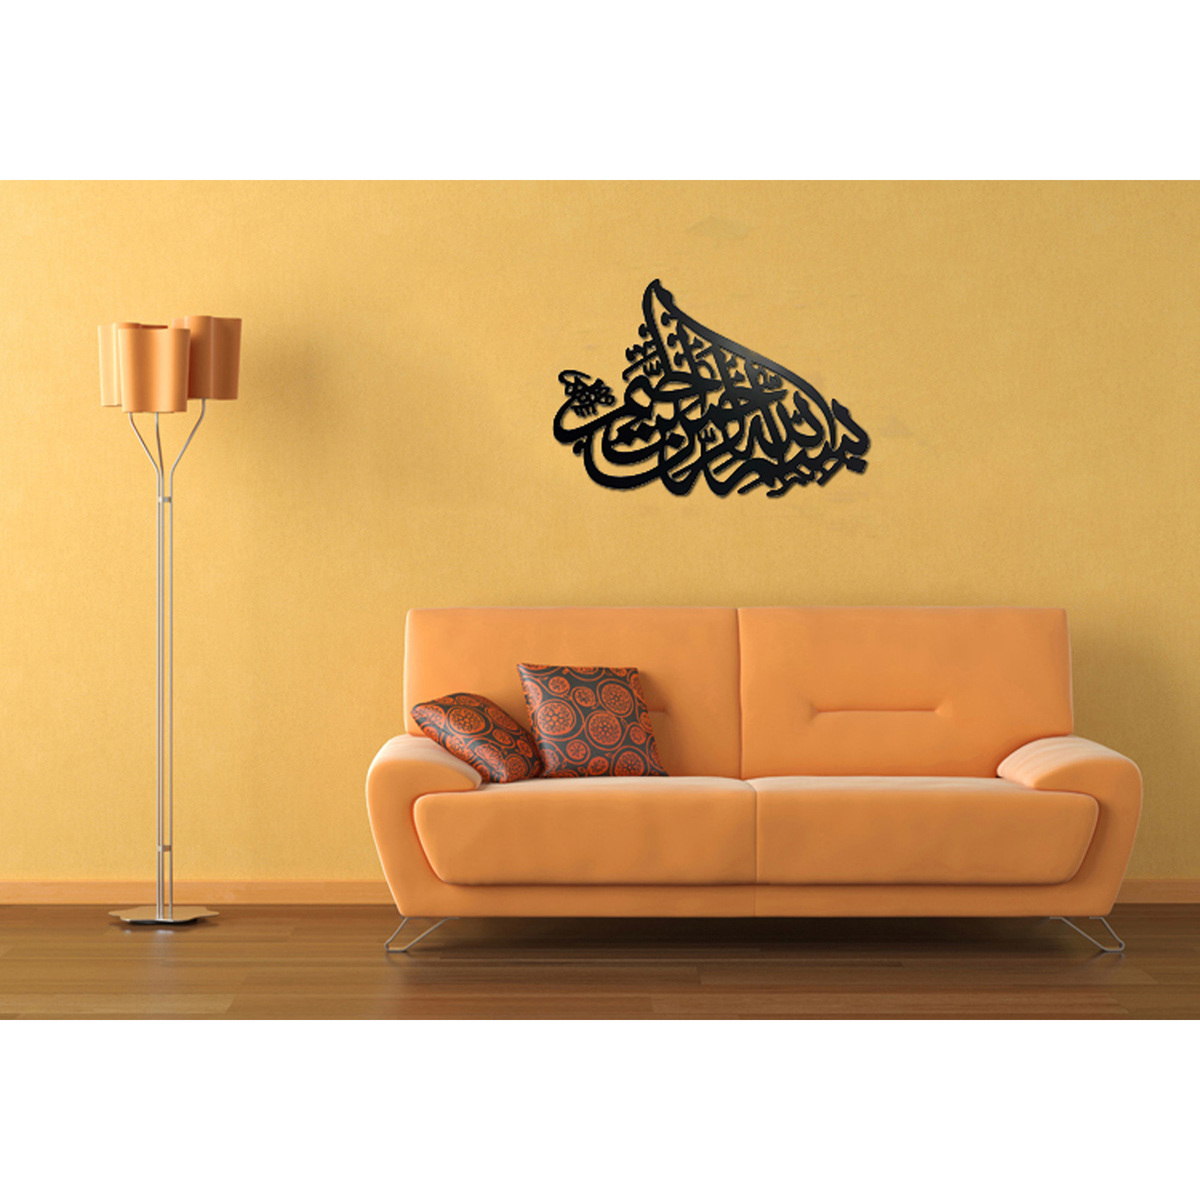 Maple Leaf "Bismillah" Islamic Wall Art, Wooden Arabic Calligraphy 60x80cm Black